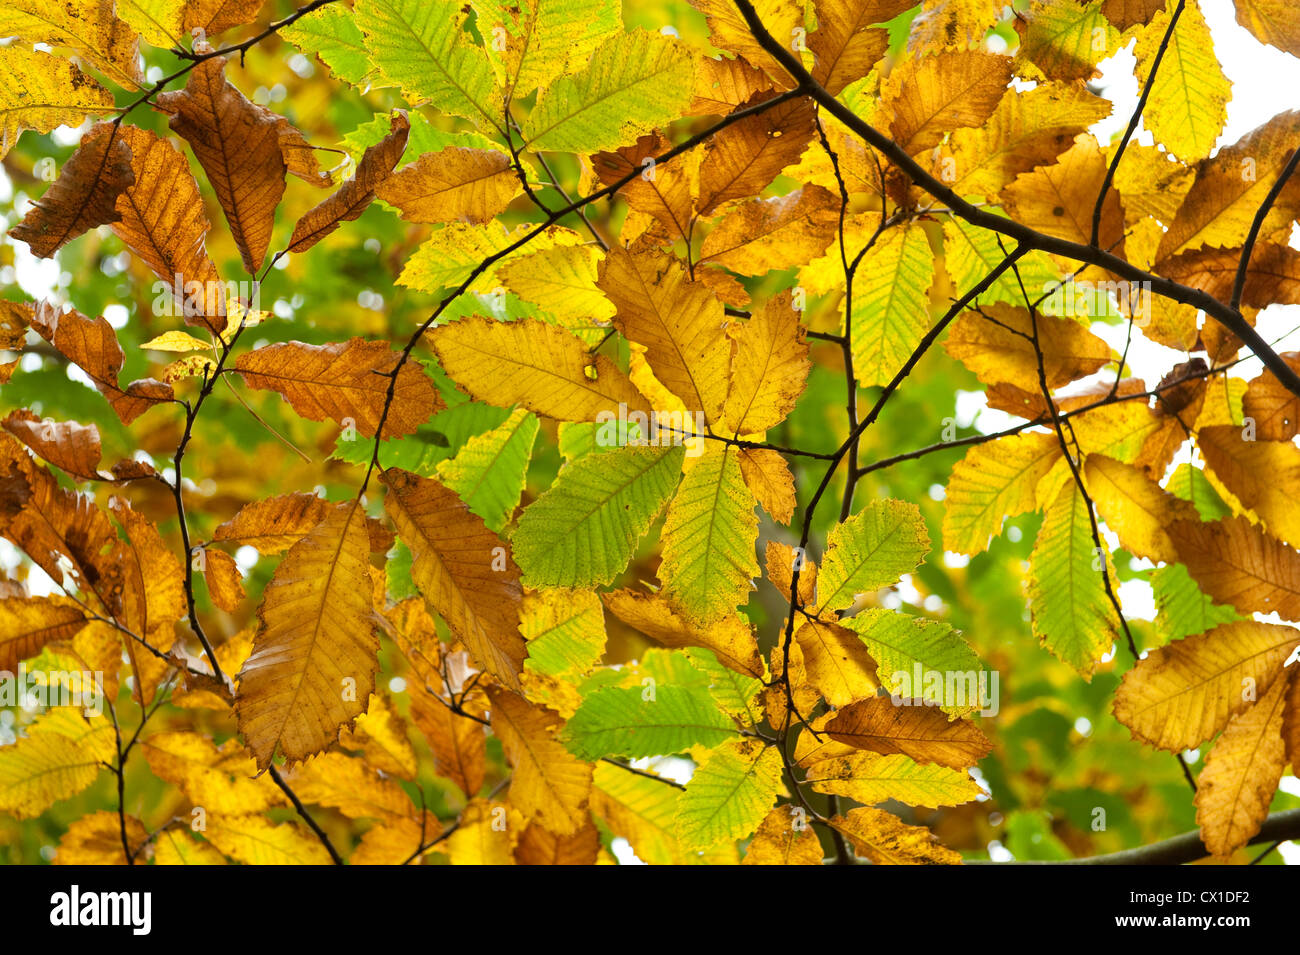 Sweet Chestnut Leaves Castanea sativa Ranscombe Farm Nature Reserve Kent UK golden autumn colours green yellow Stock Photo